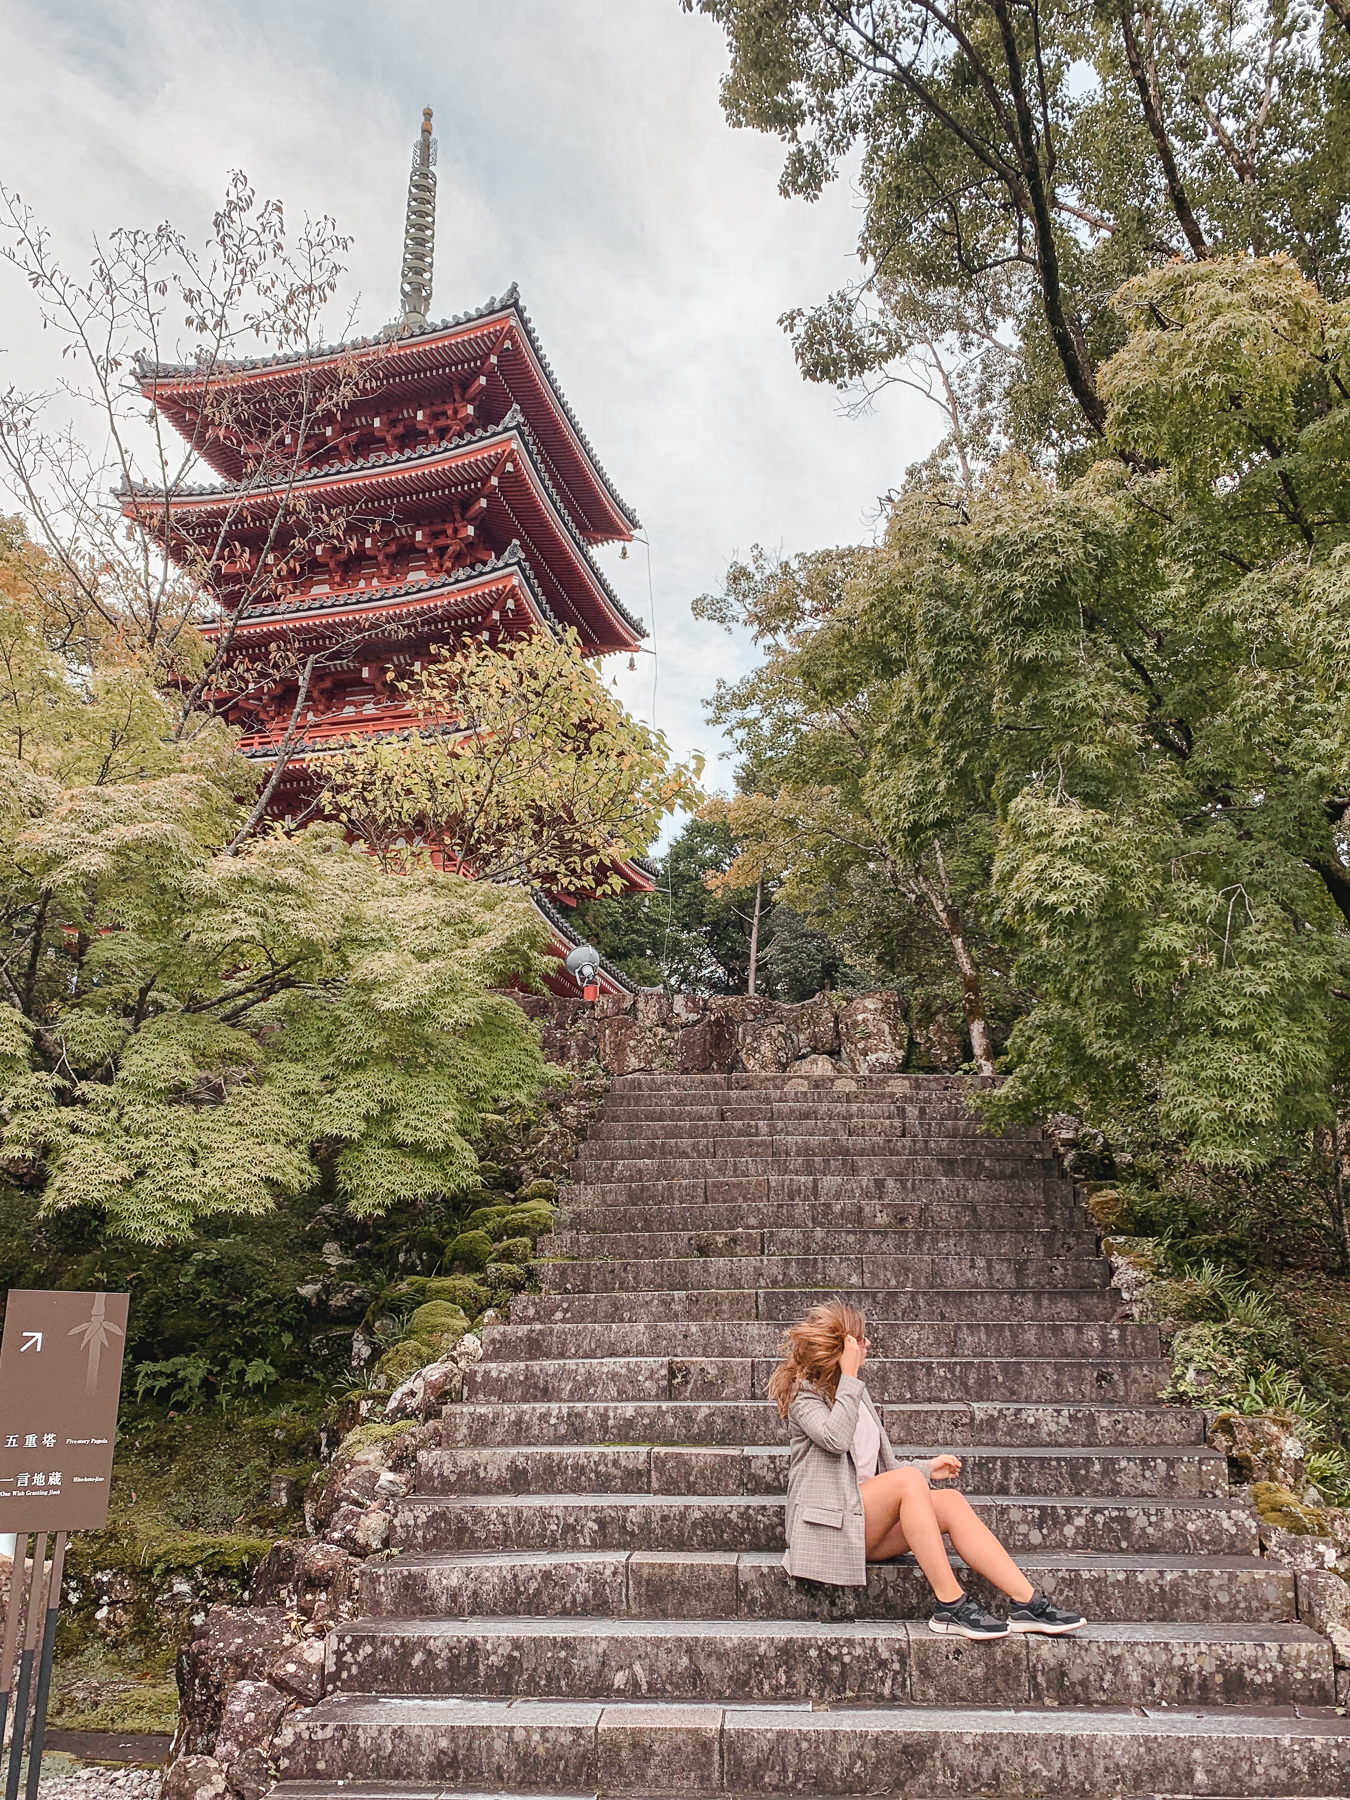 How To Spend 4 Days In Japan’s Underrated Shikoku Region | lifestyletraveler.co | IG: @lifestyletraveler.co